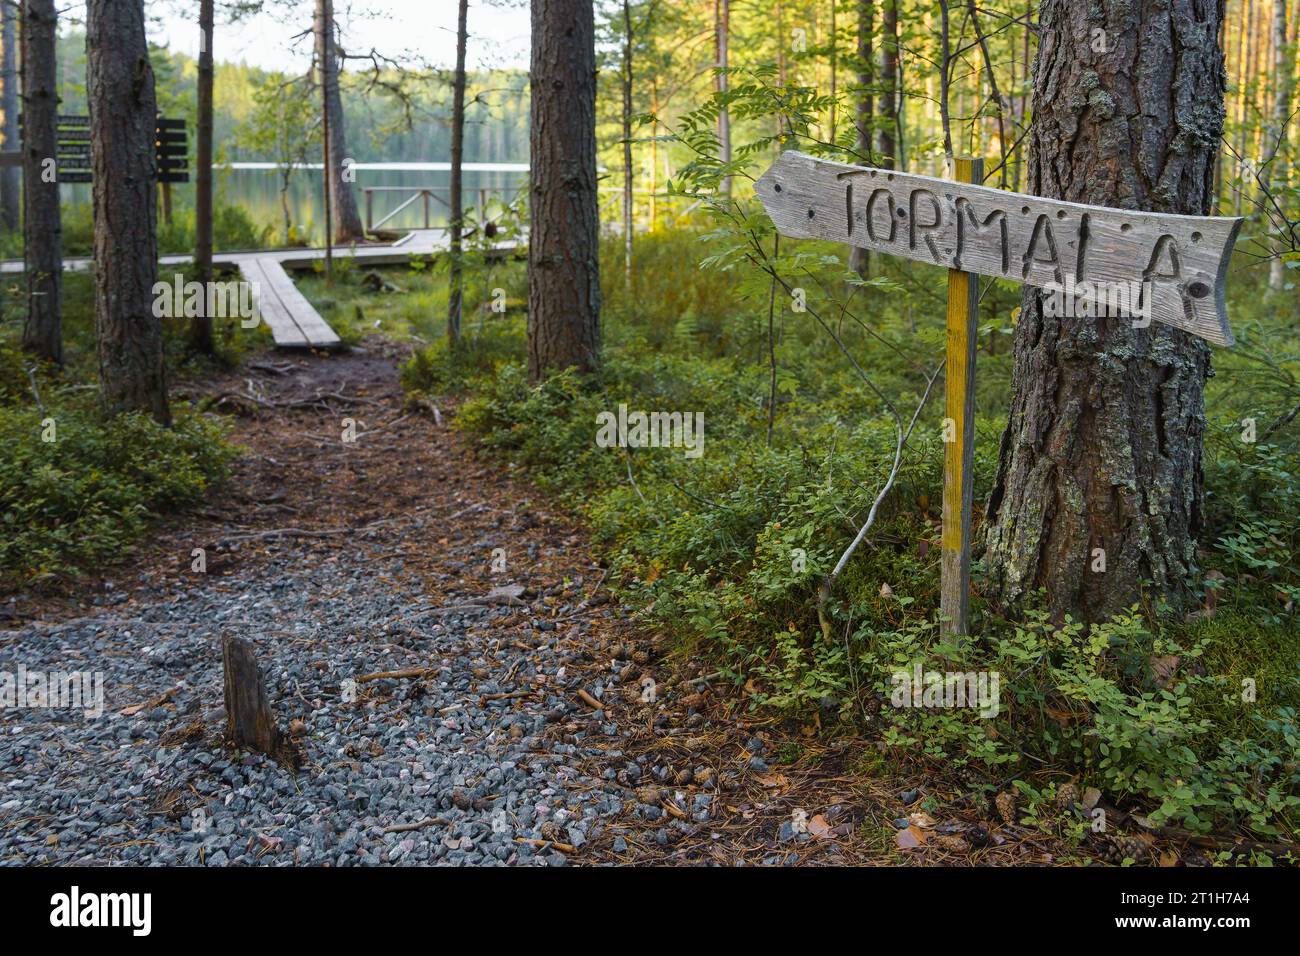 Wooden directional sign pointing towards Törmälä in Southern Konnevesi National Park, Finland Stock Photo